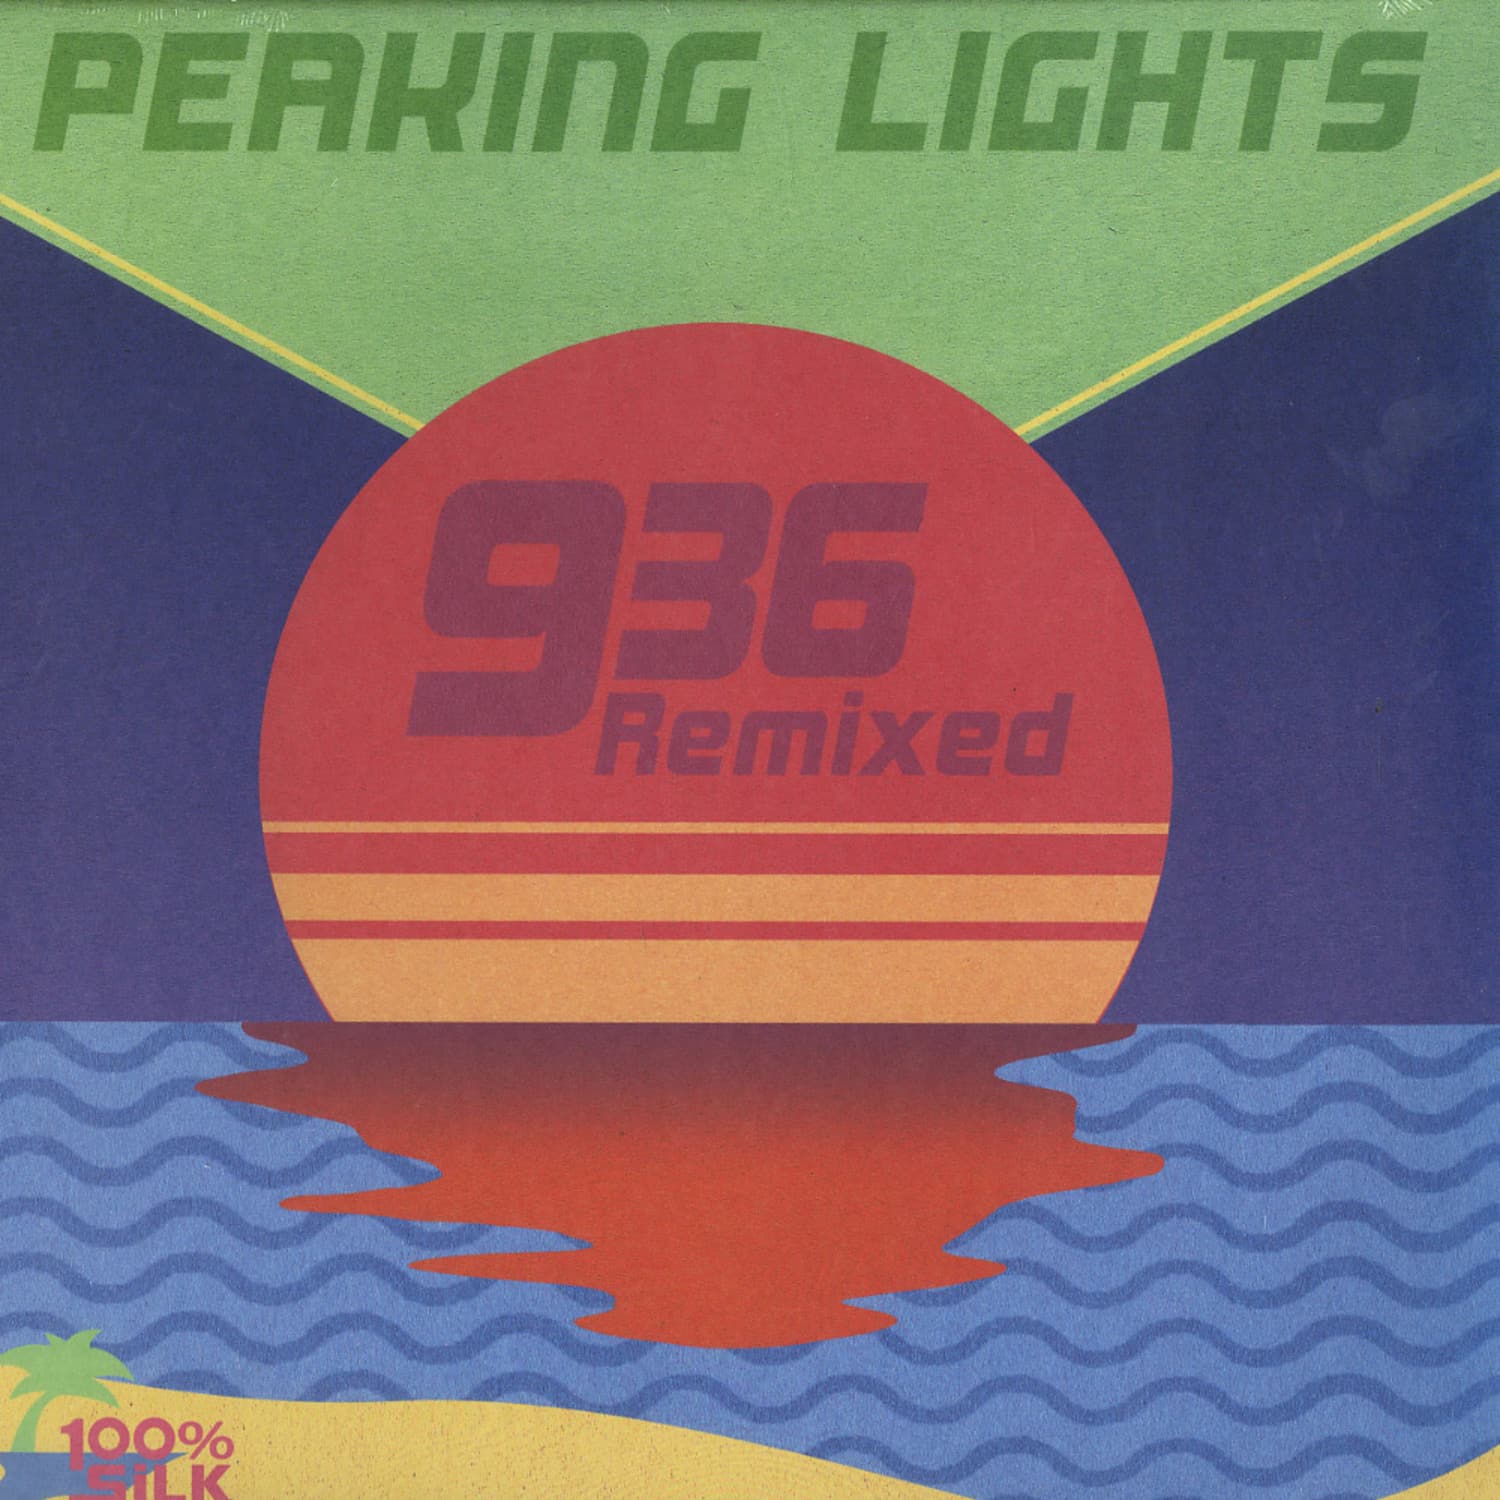 Peaking Lights - 936 REMIXED